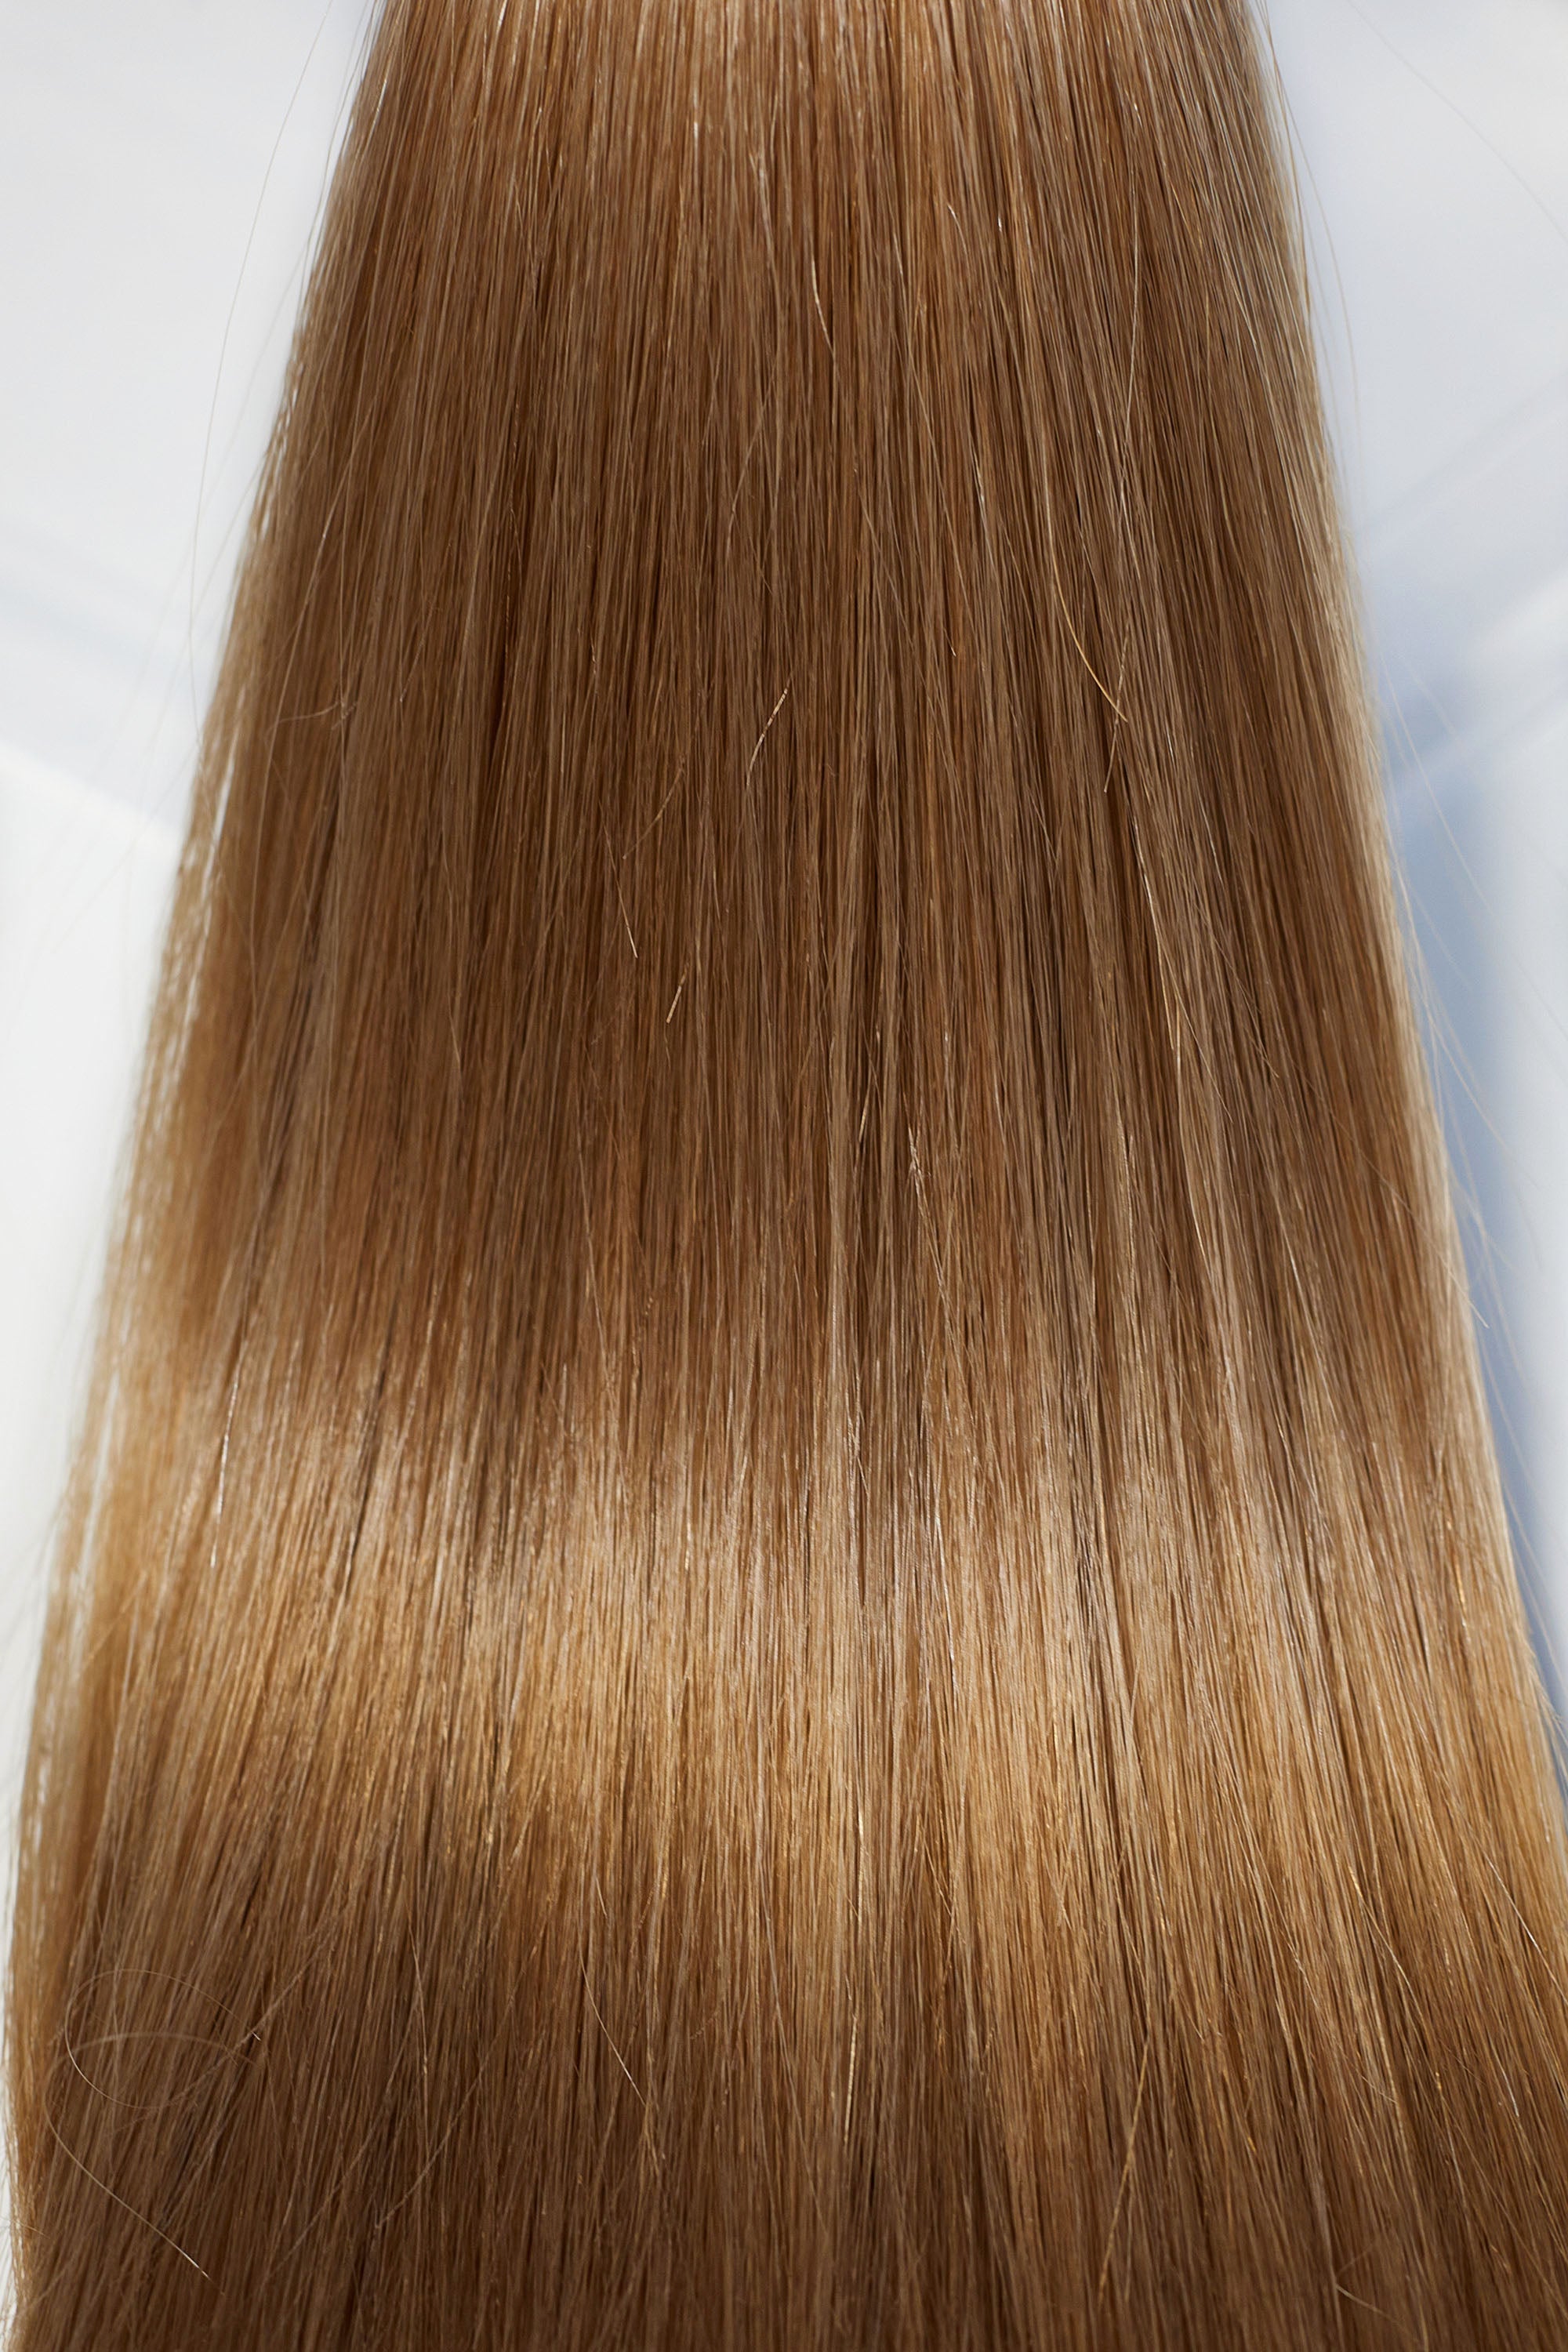 Behair professional Keratin Tip "Premium" 26" (65cm) Natural Straight Caramel Brown #8 - 25g (Standart - 0.7g each pcs) hair extensions